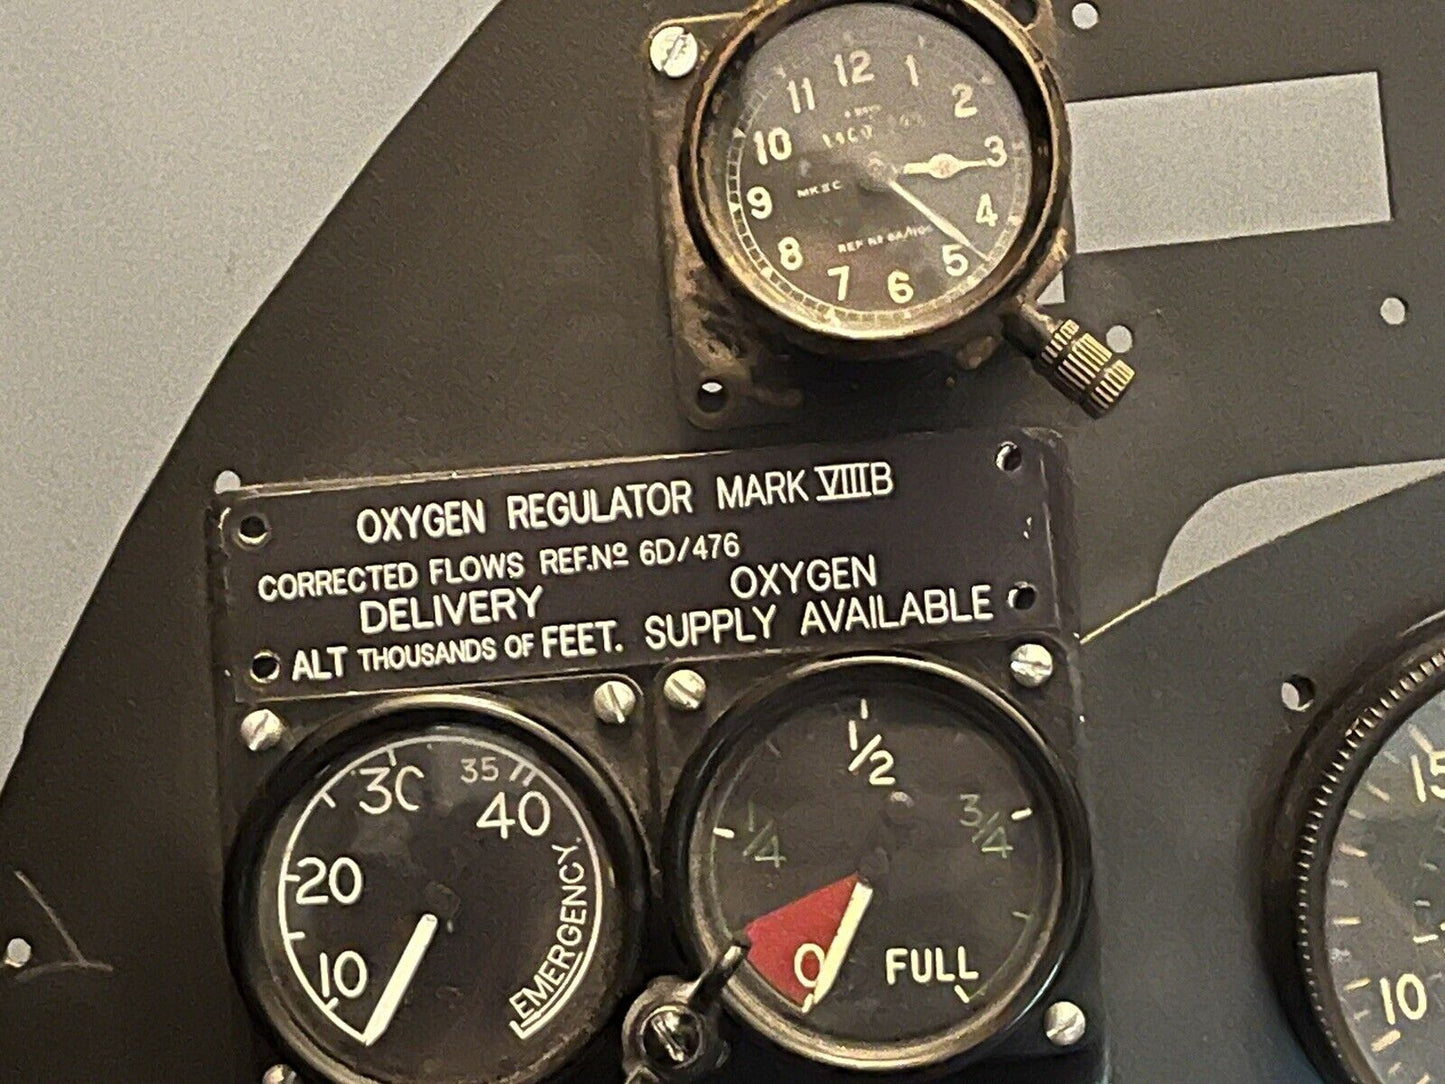 RAF Cockpit Dash With Air Ministry Dials